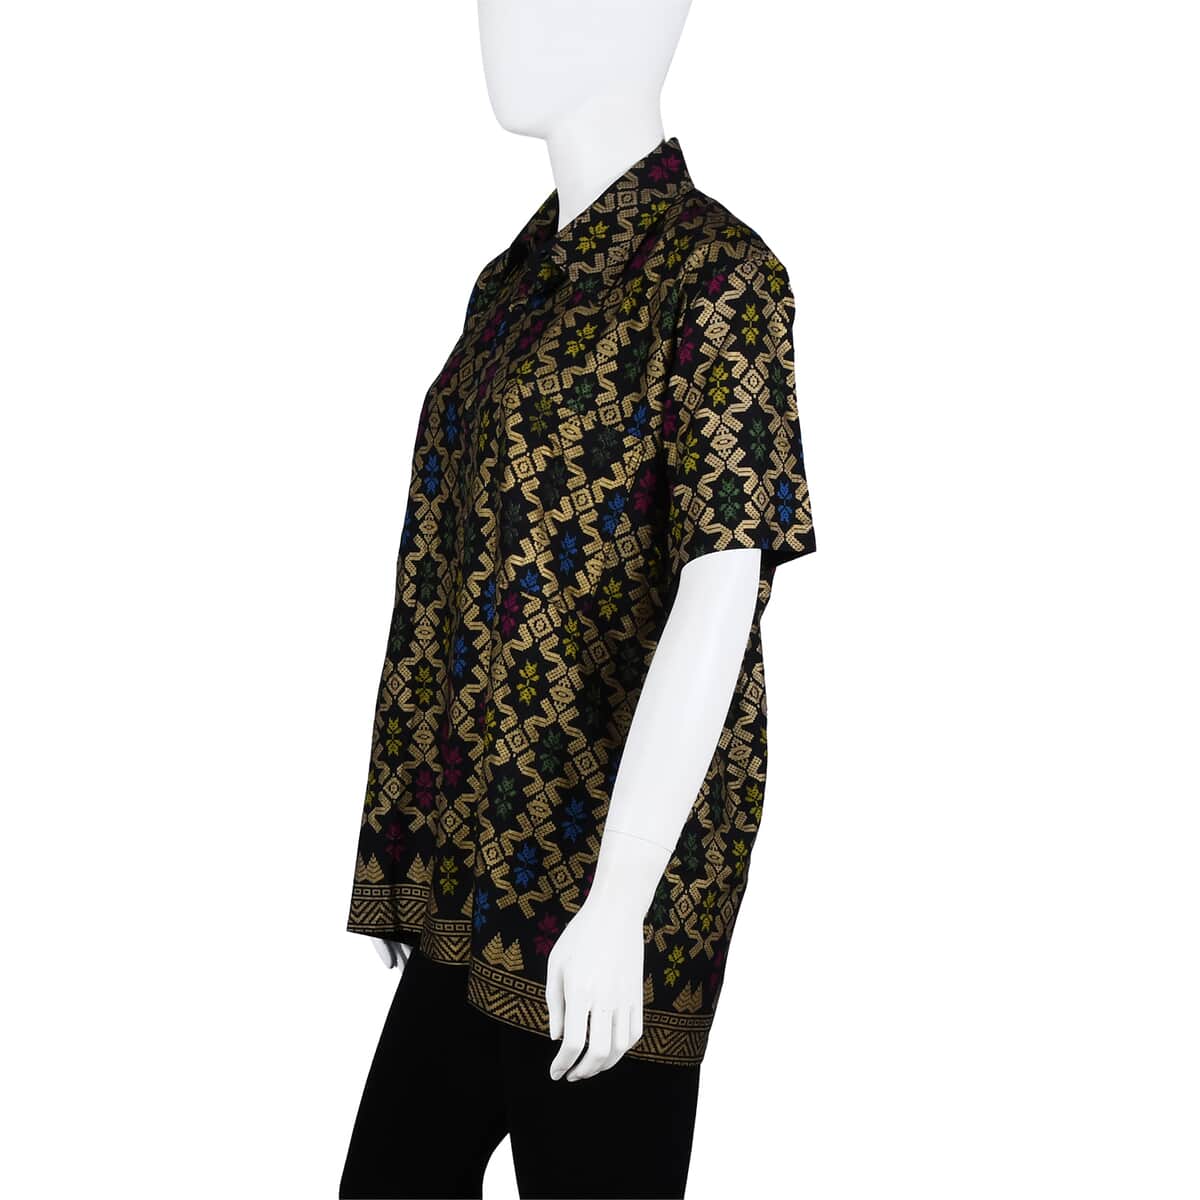 Jovie Multicolor Balinese Motif Printed Batik Shirt - XXL/XXXL image number 2